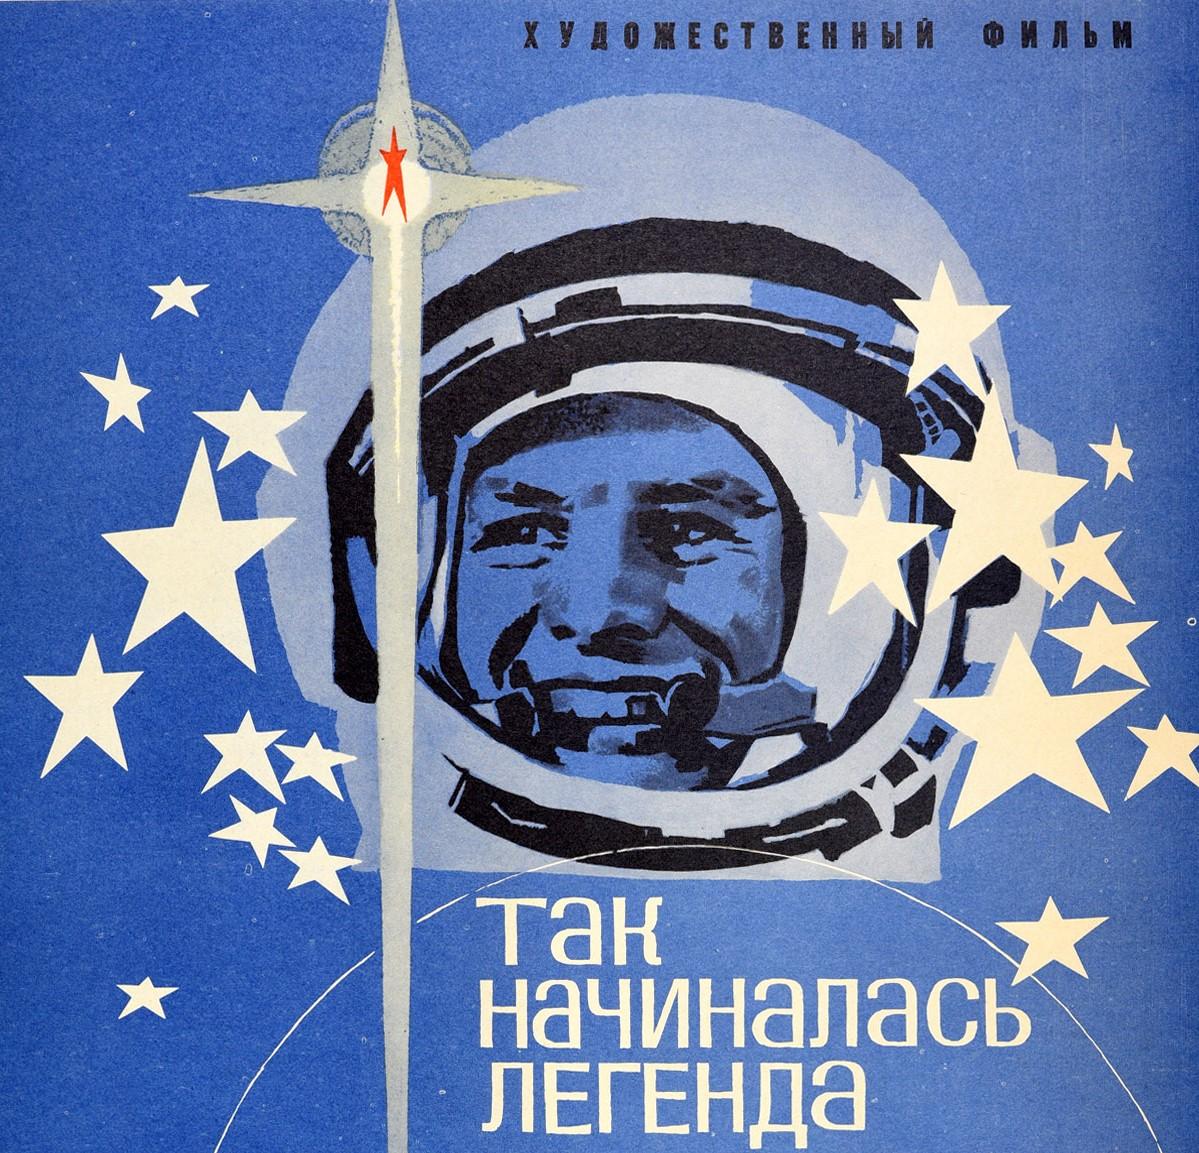 Original Vintage Film Poster How The Legend Began Yuri Gagarin Cosmonaut Pilot - Print by A. Lemeschenko